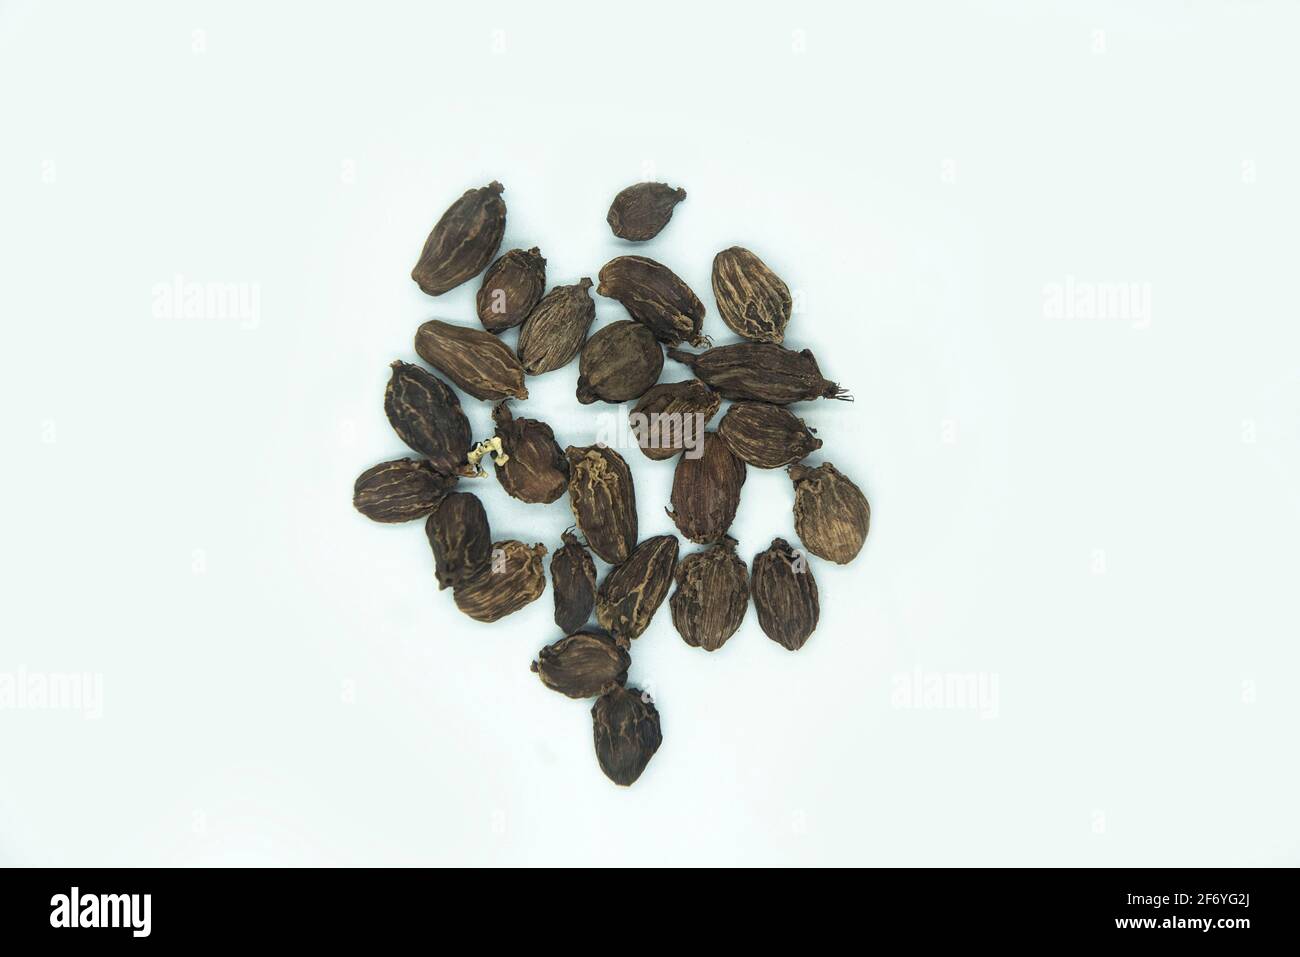 Mumbai , India - 15 March 2021, Indian Spices buds of amomum subulatum also known as Black cardamom  scattered on white background at Mumbai Maharasht Stock Photo